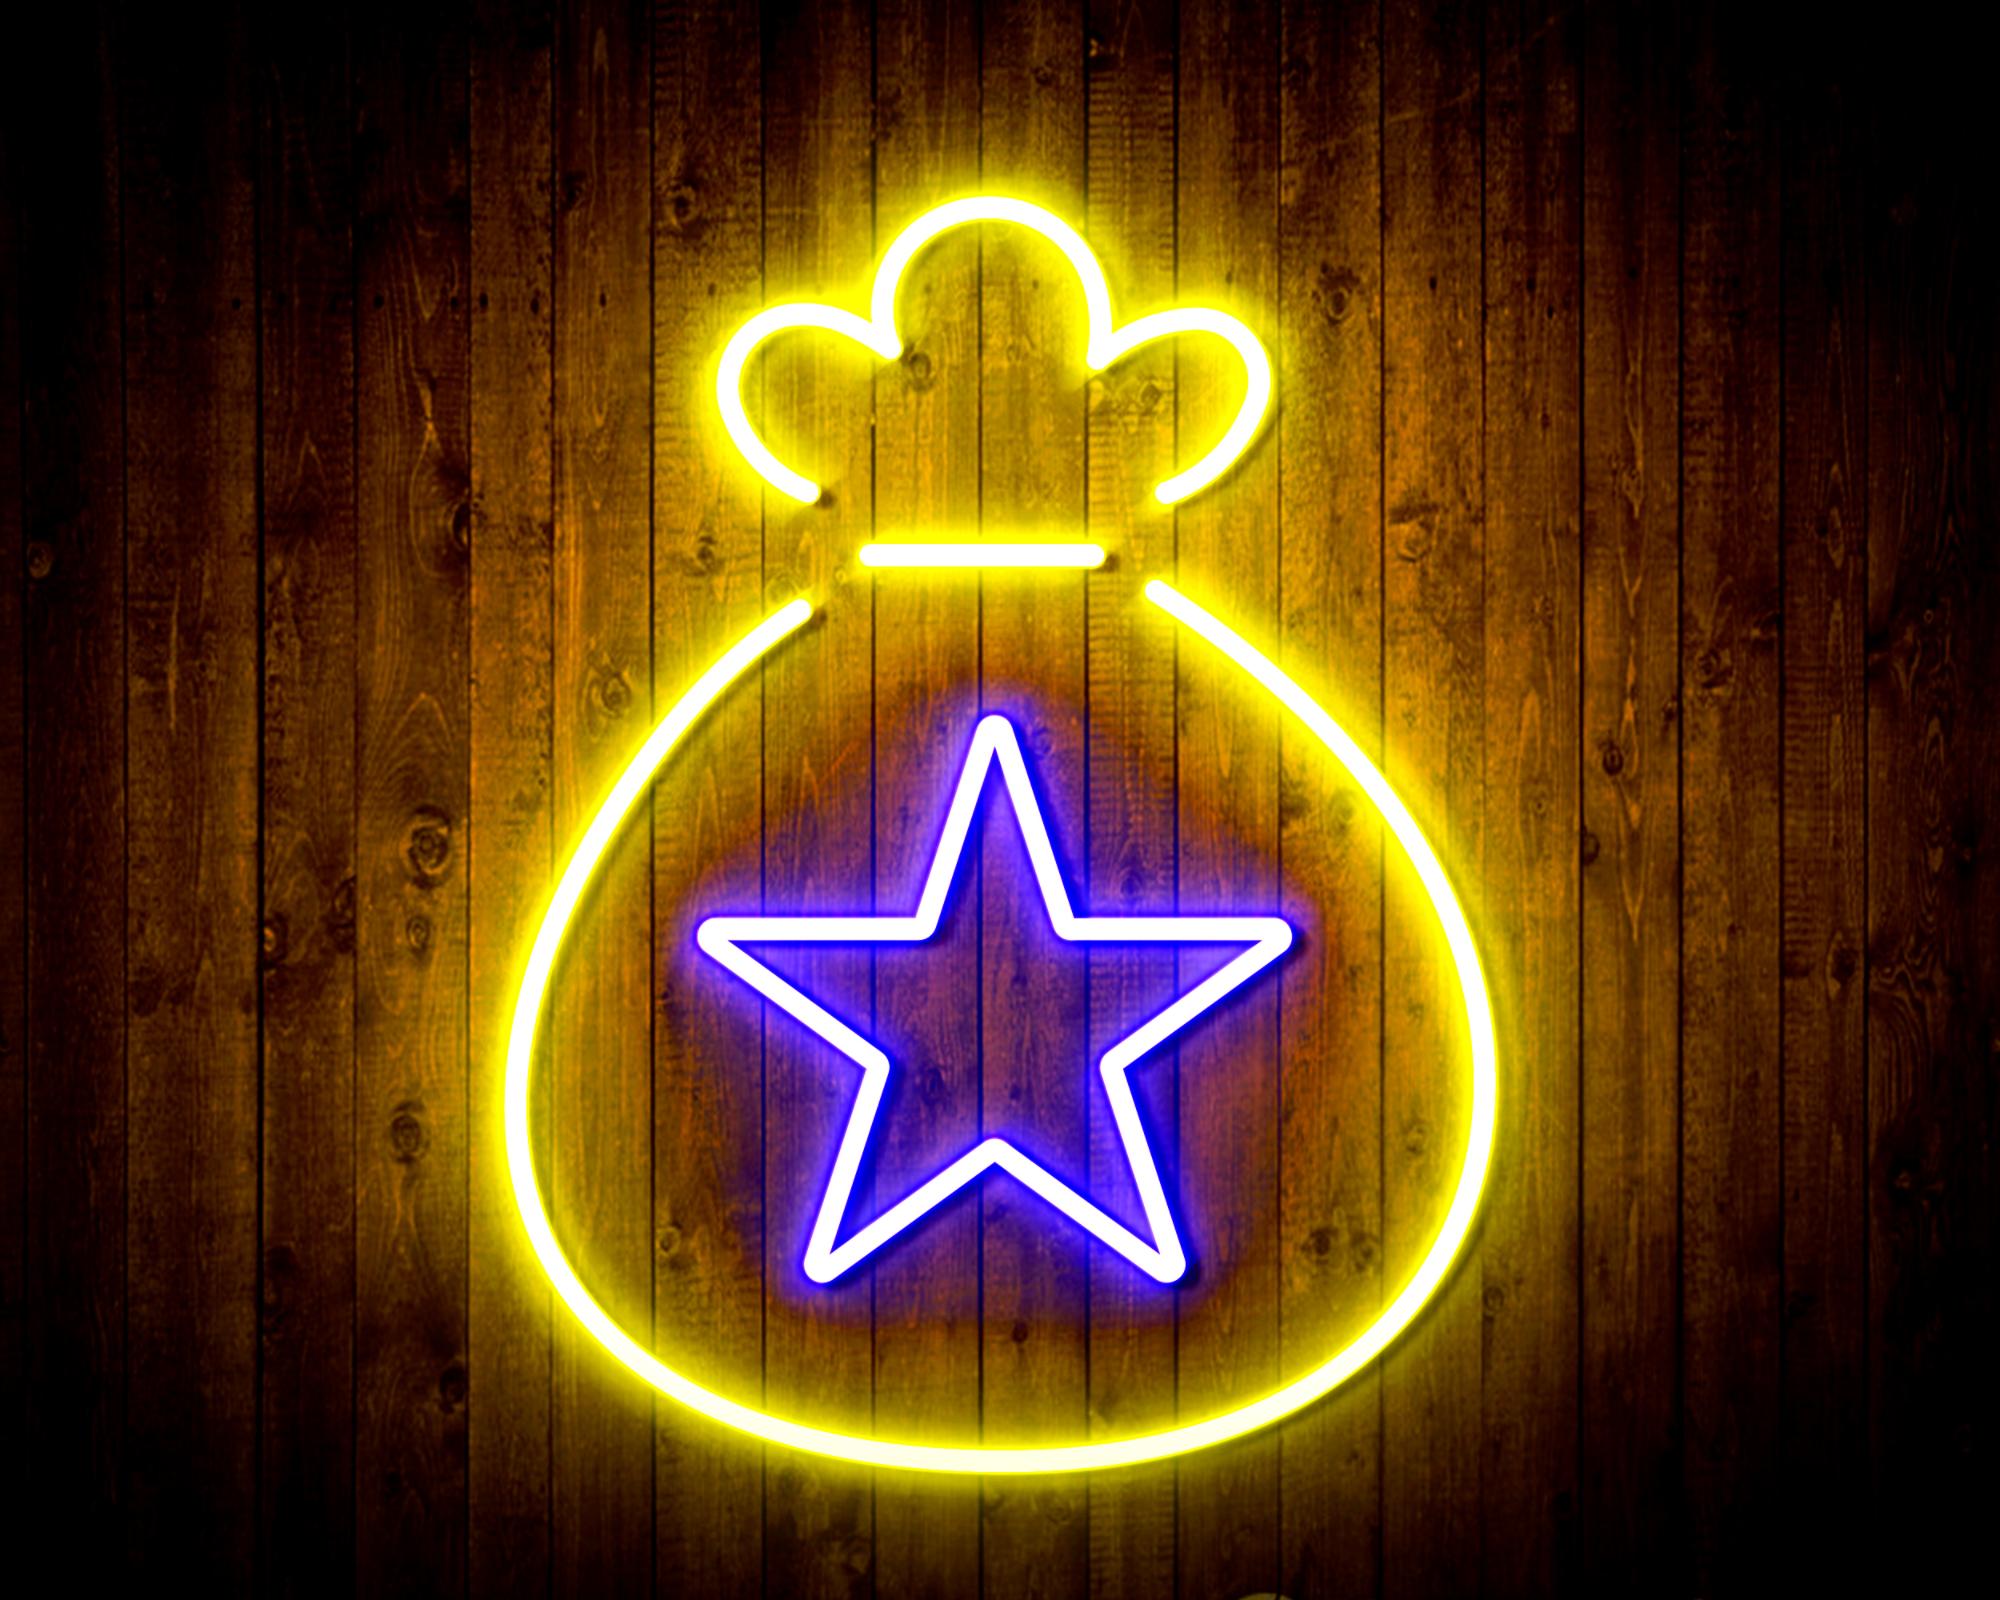 Snata Claus Bag LED Neon Sign Wall Light